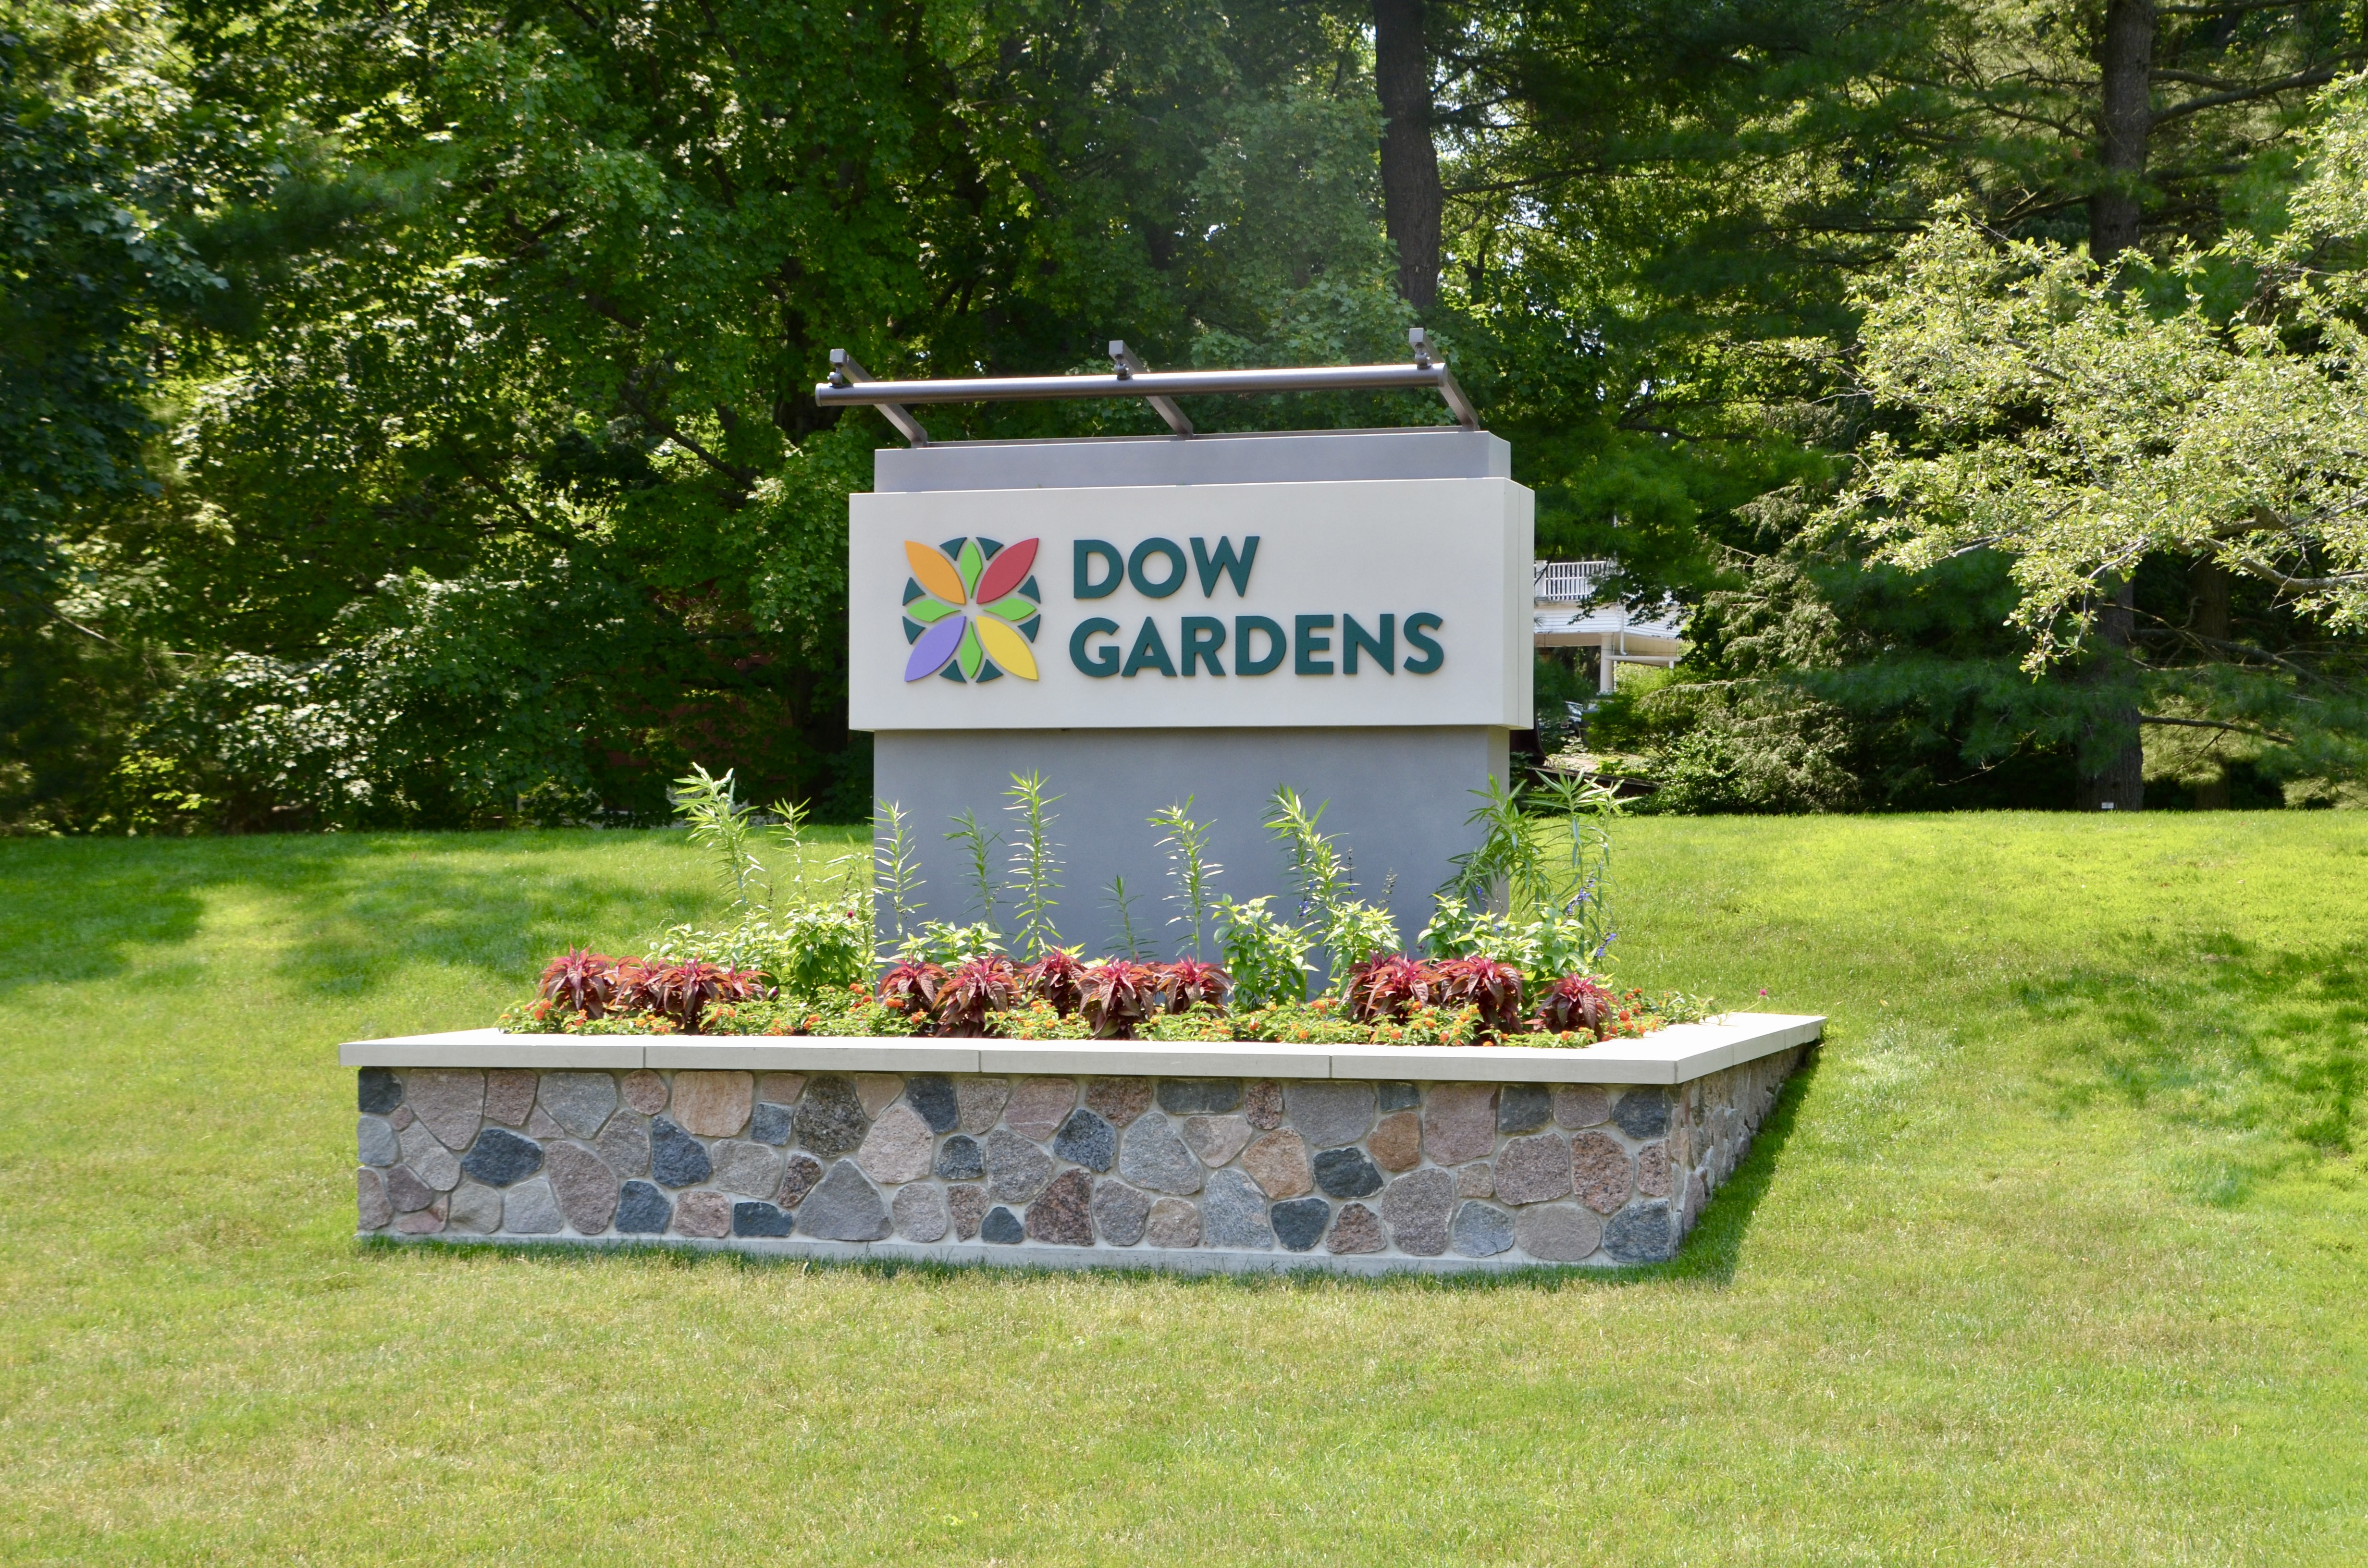 Dow Gardens Midland Michigan Welcome Sign